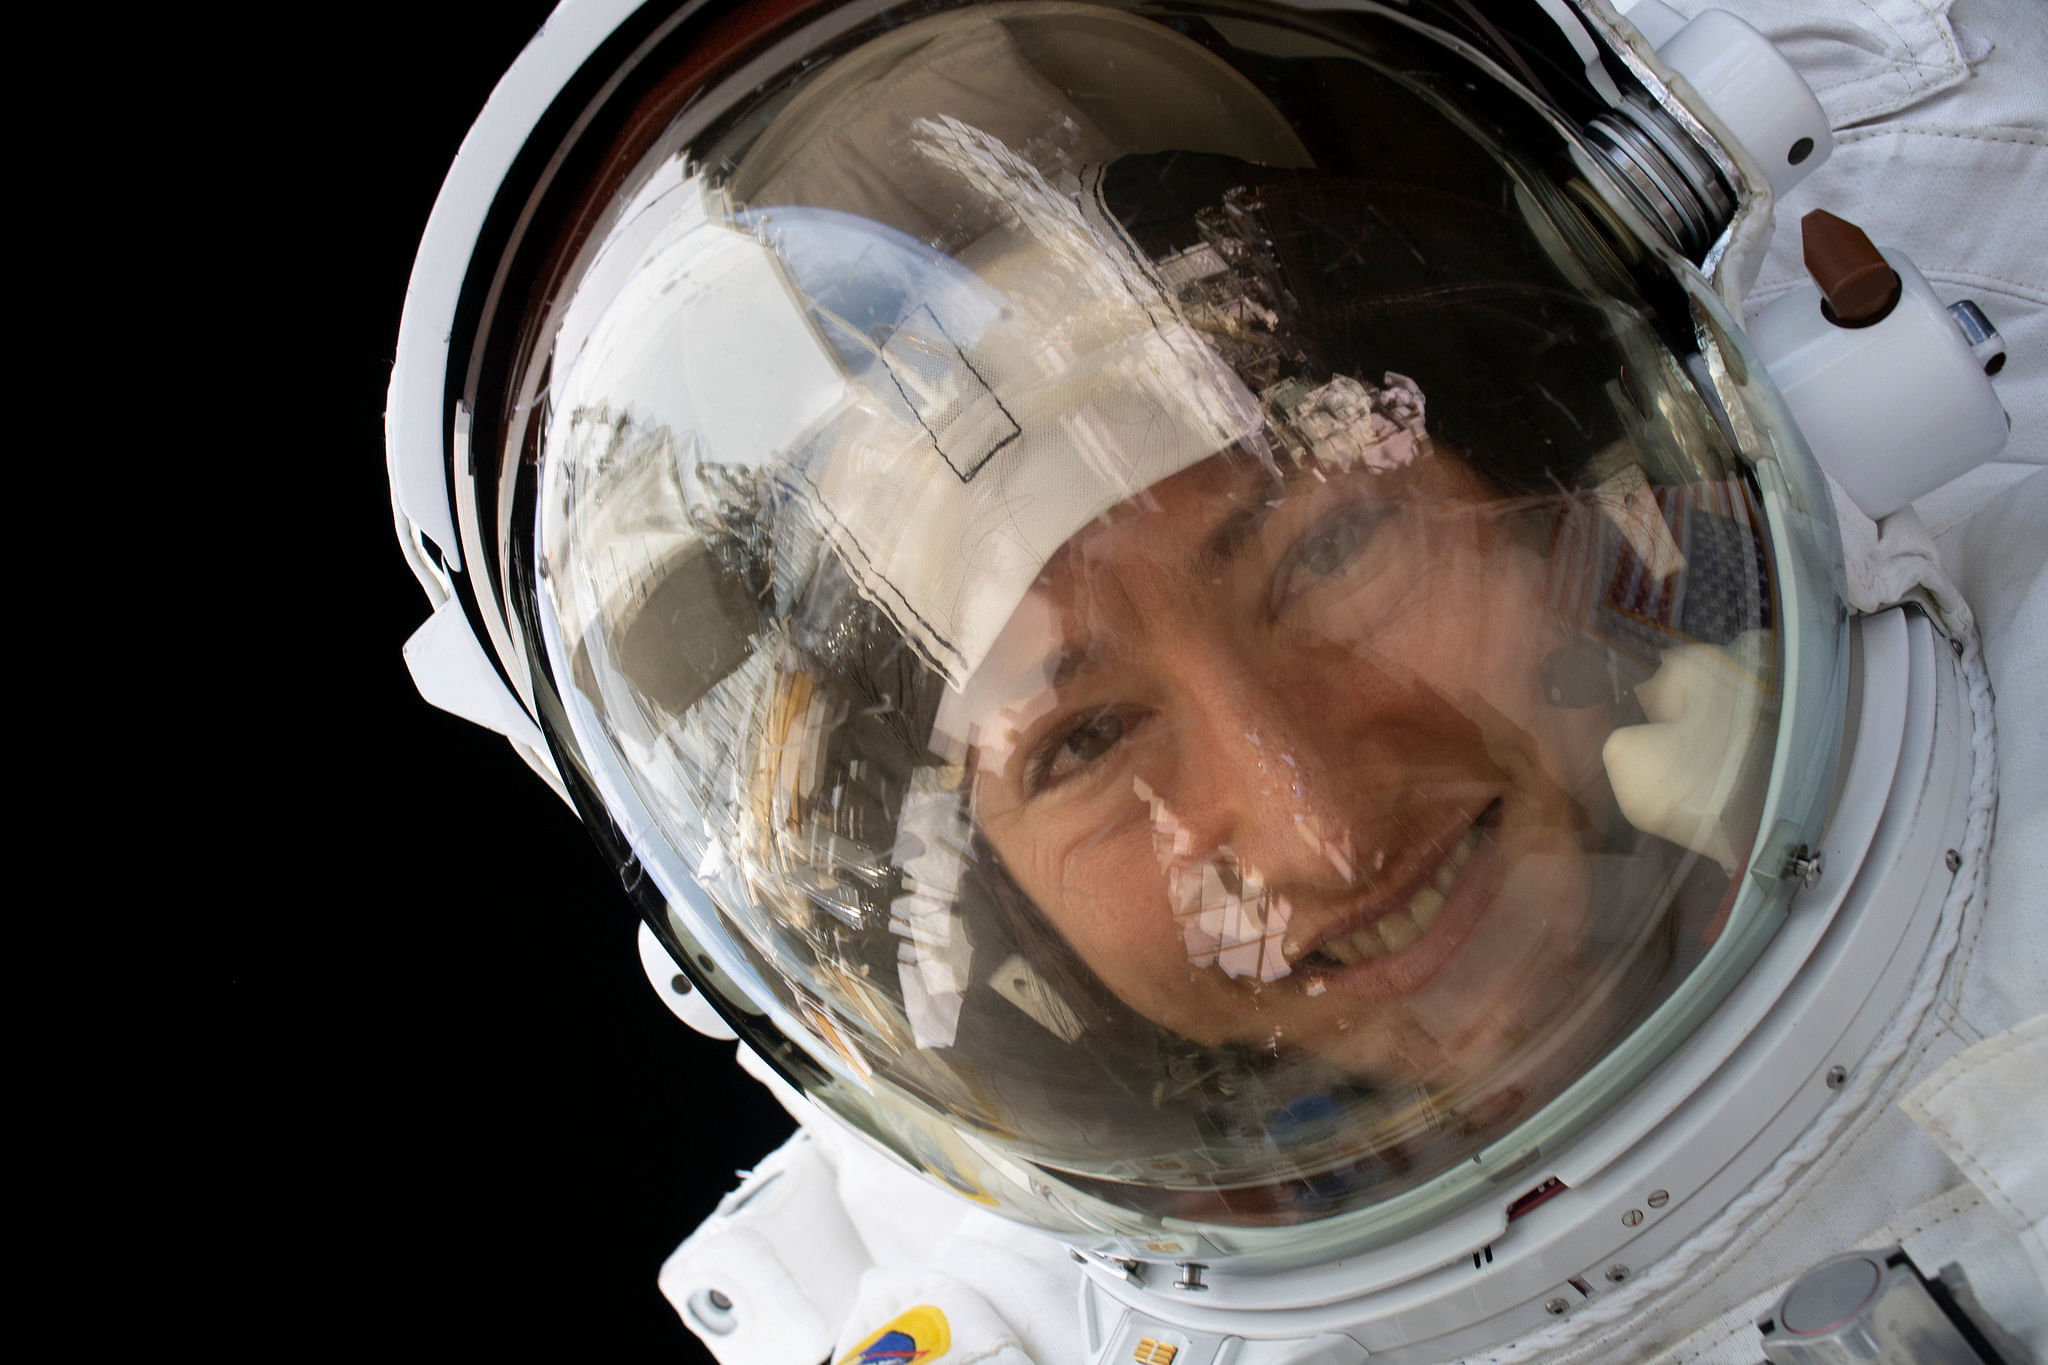 NASA astronaut Christina Koch. (AFP Photo)